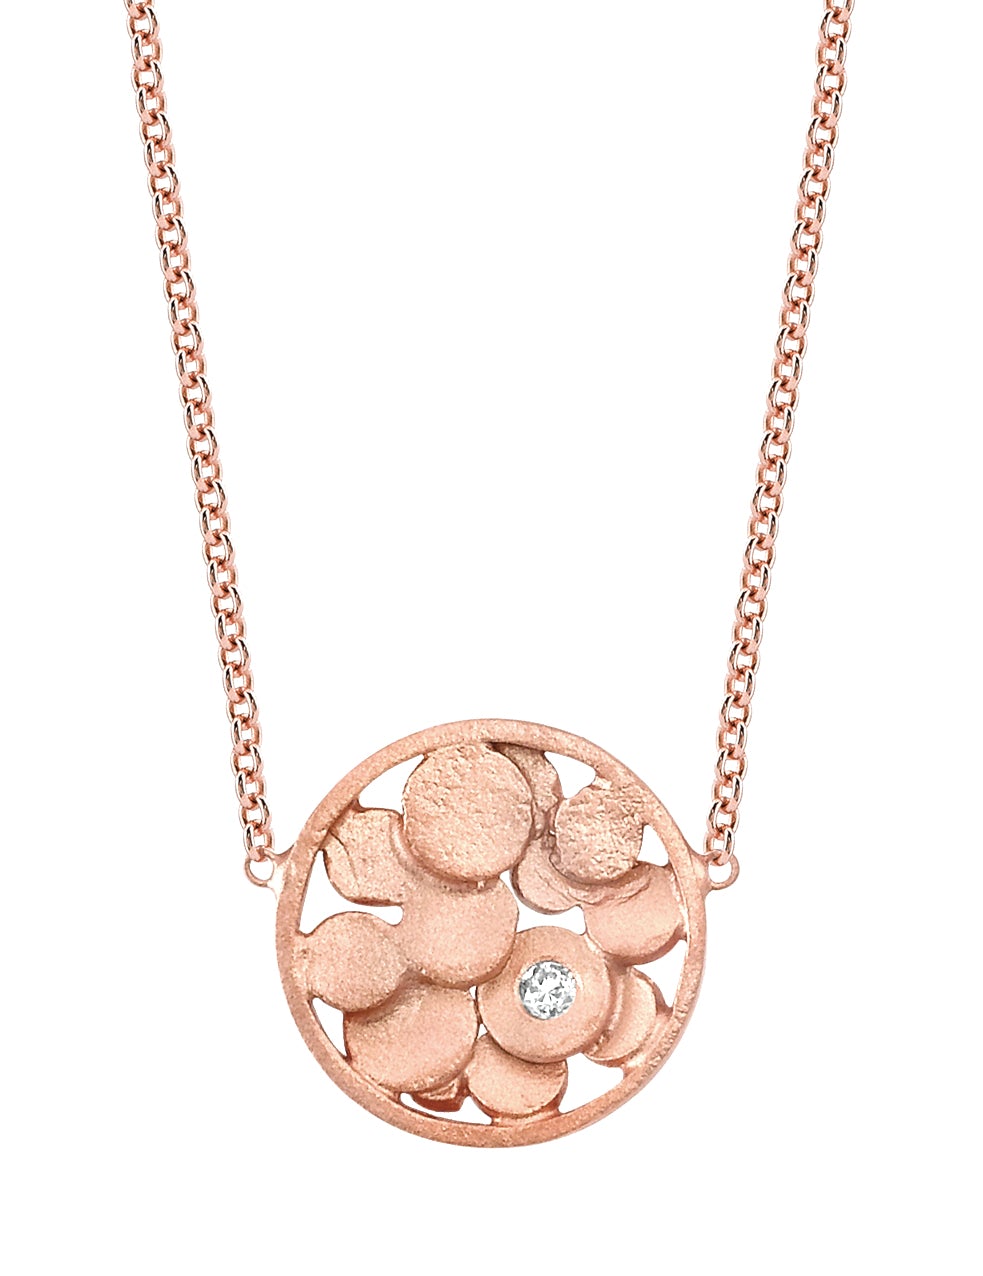 Inner Circle Necklace - Ele Keats Jewelry